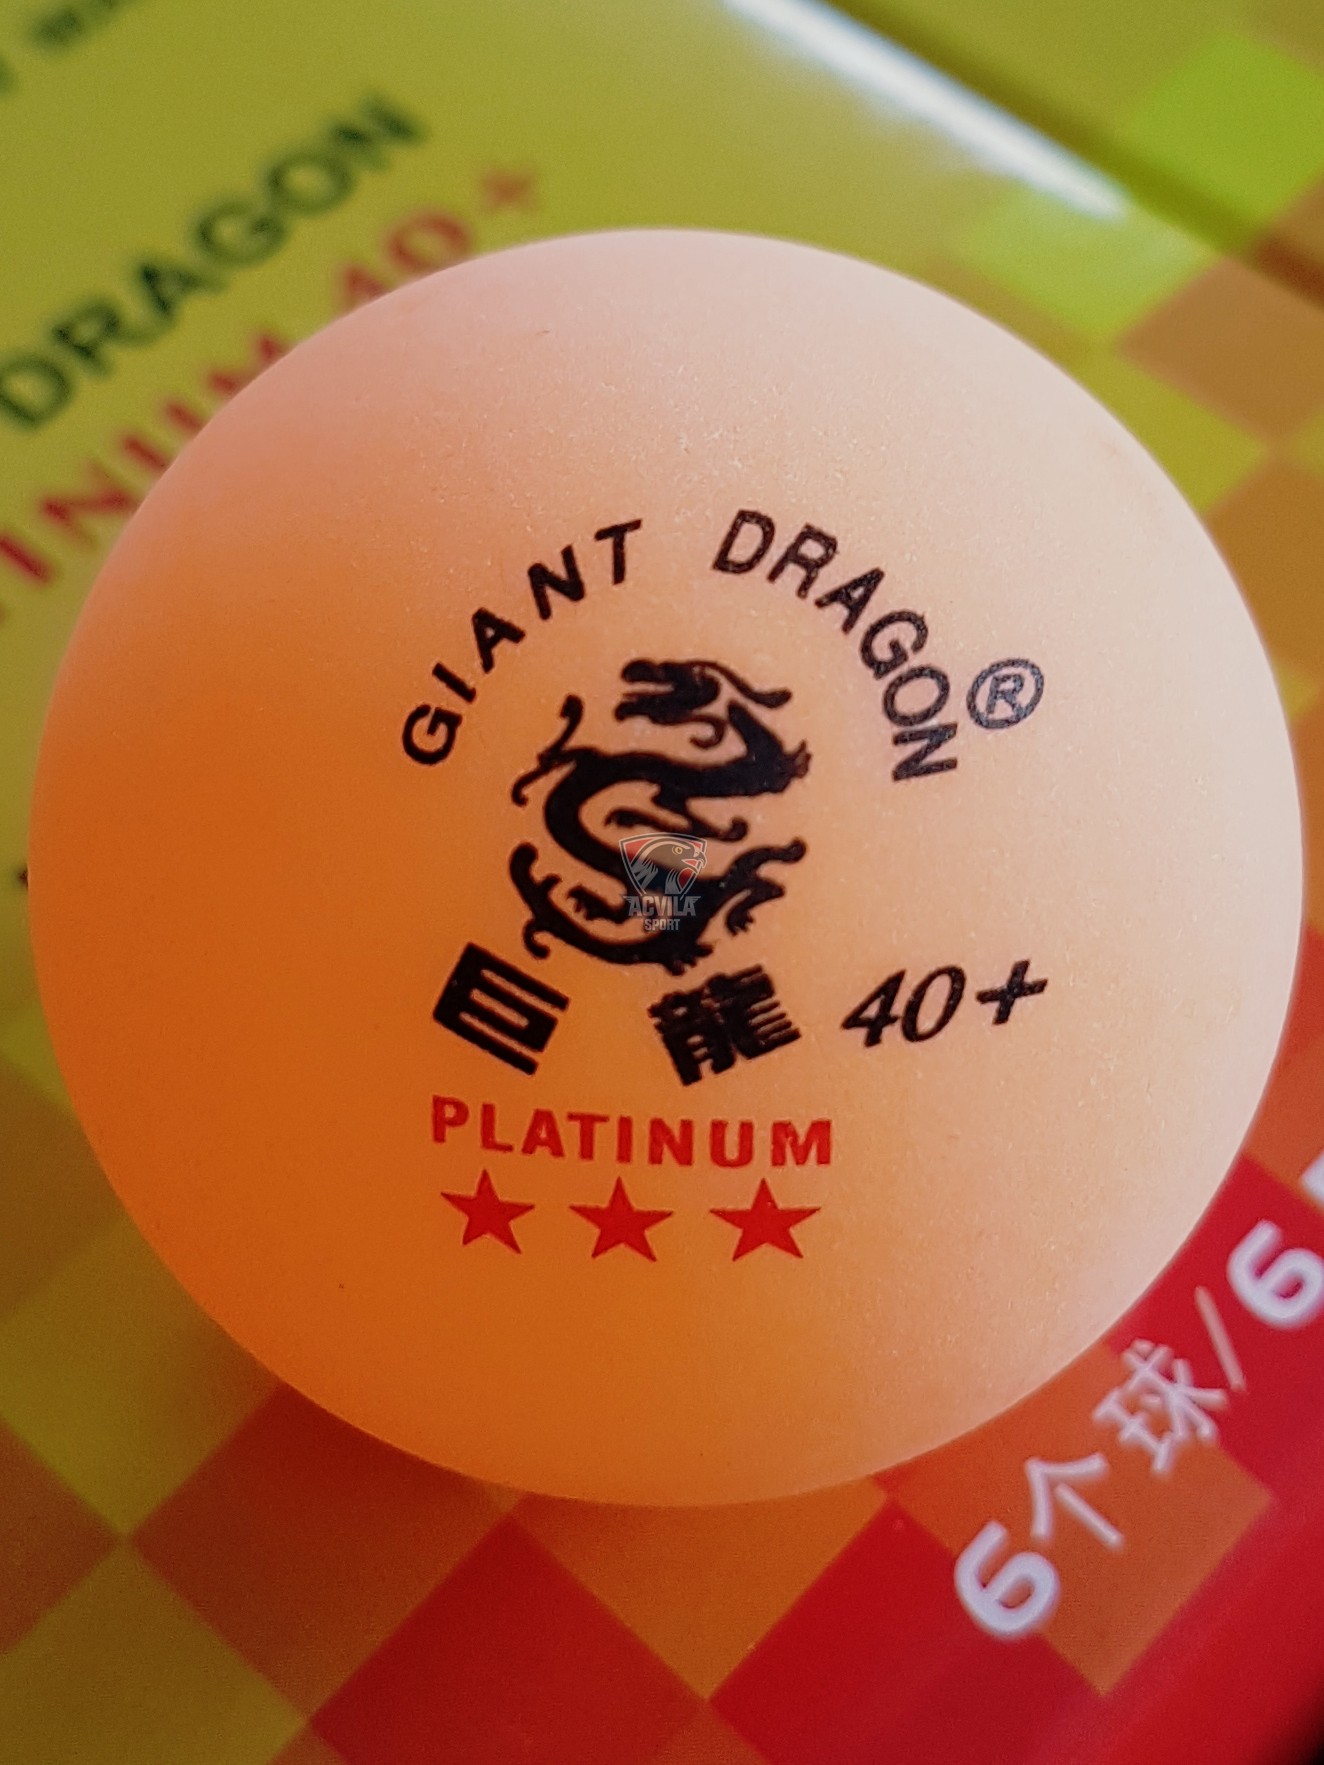 photo 2 Мяч для настольного тенниса Giant Dragon Platinum 40+ 3 звезды